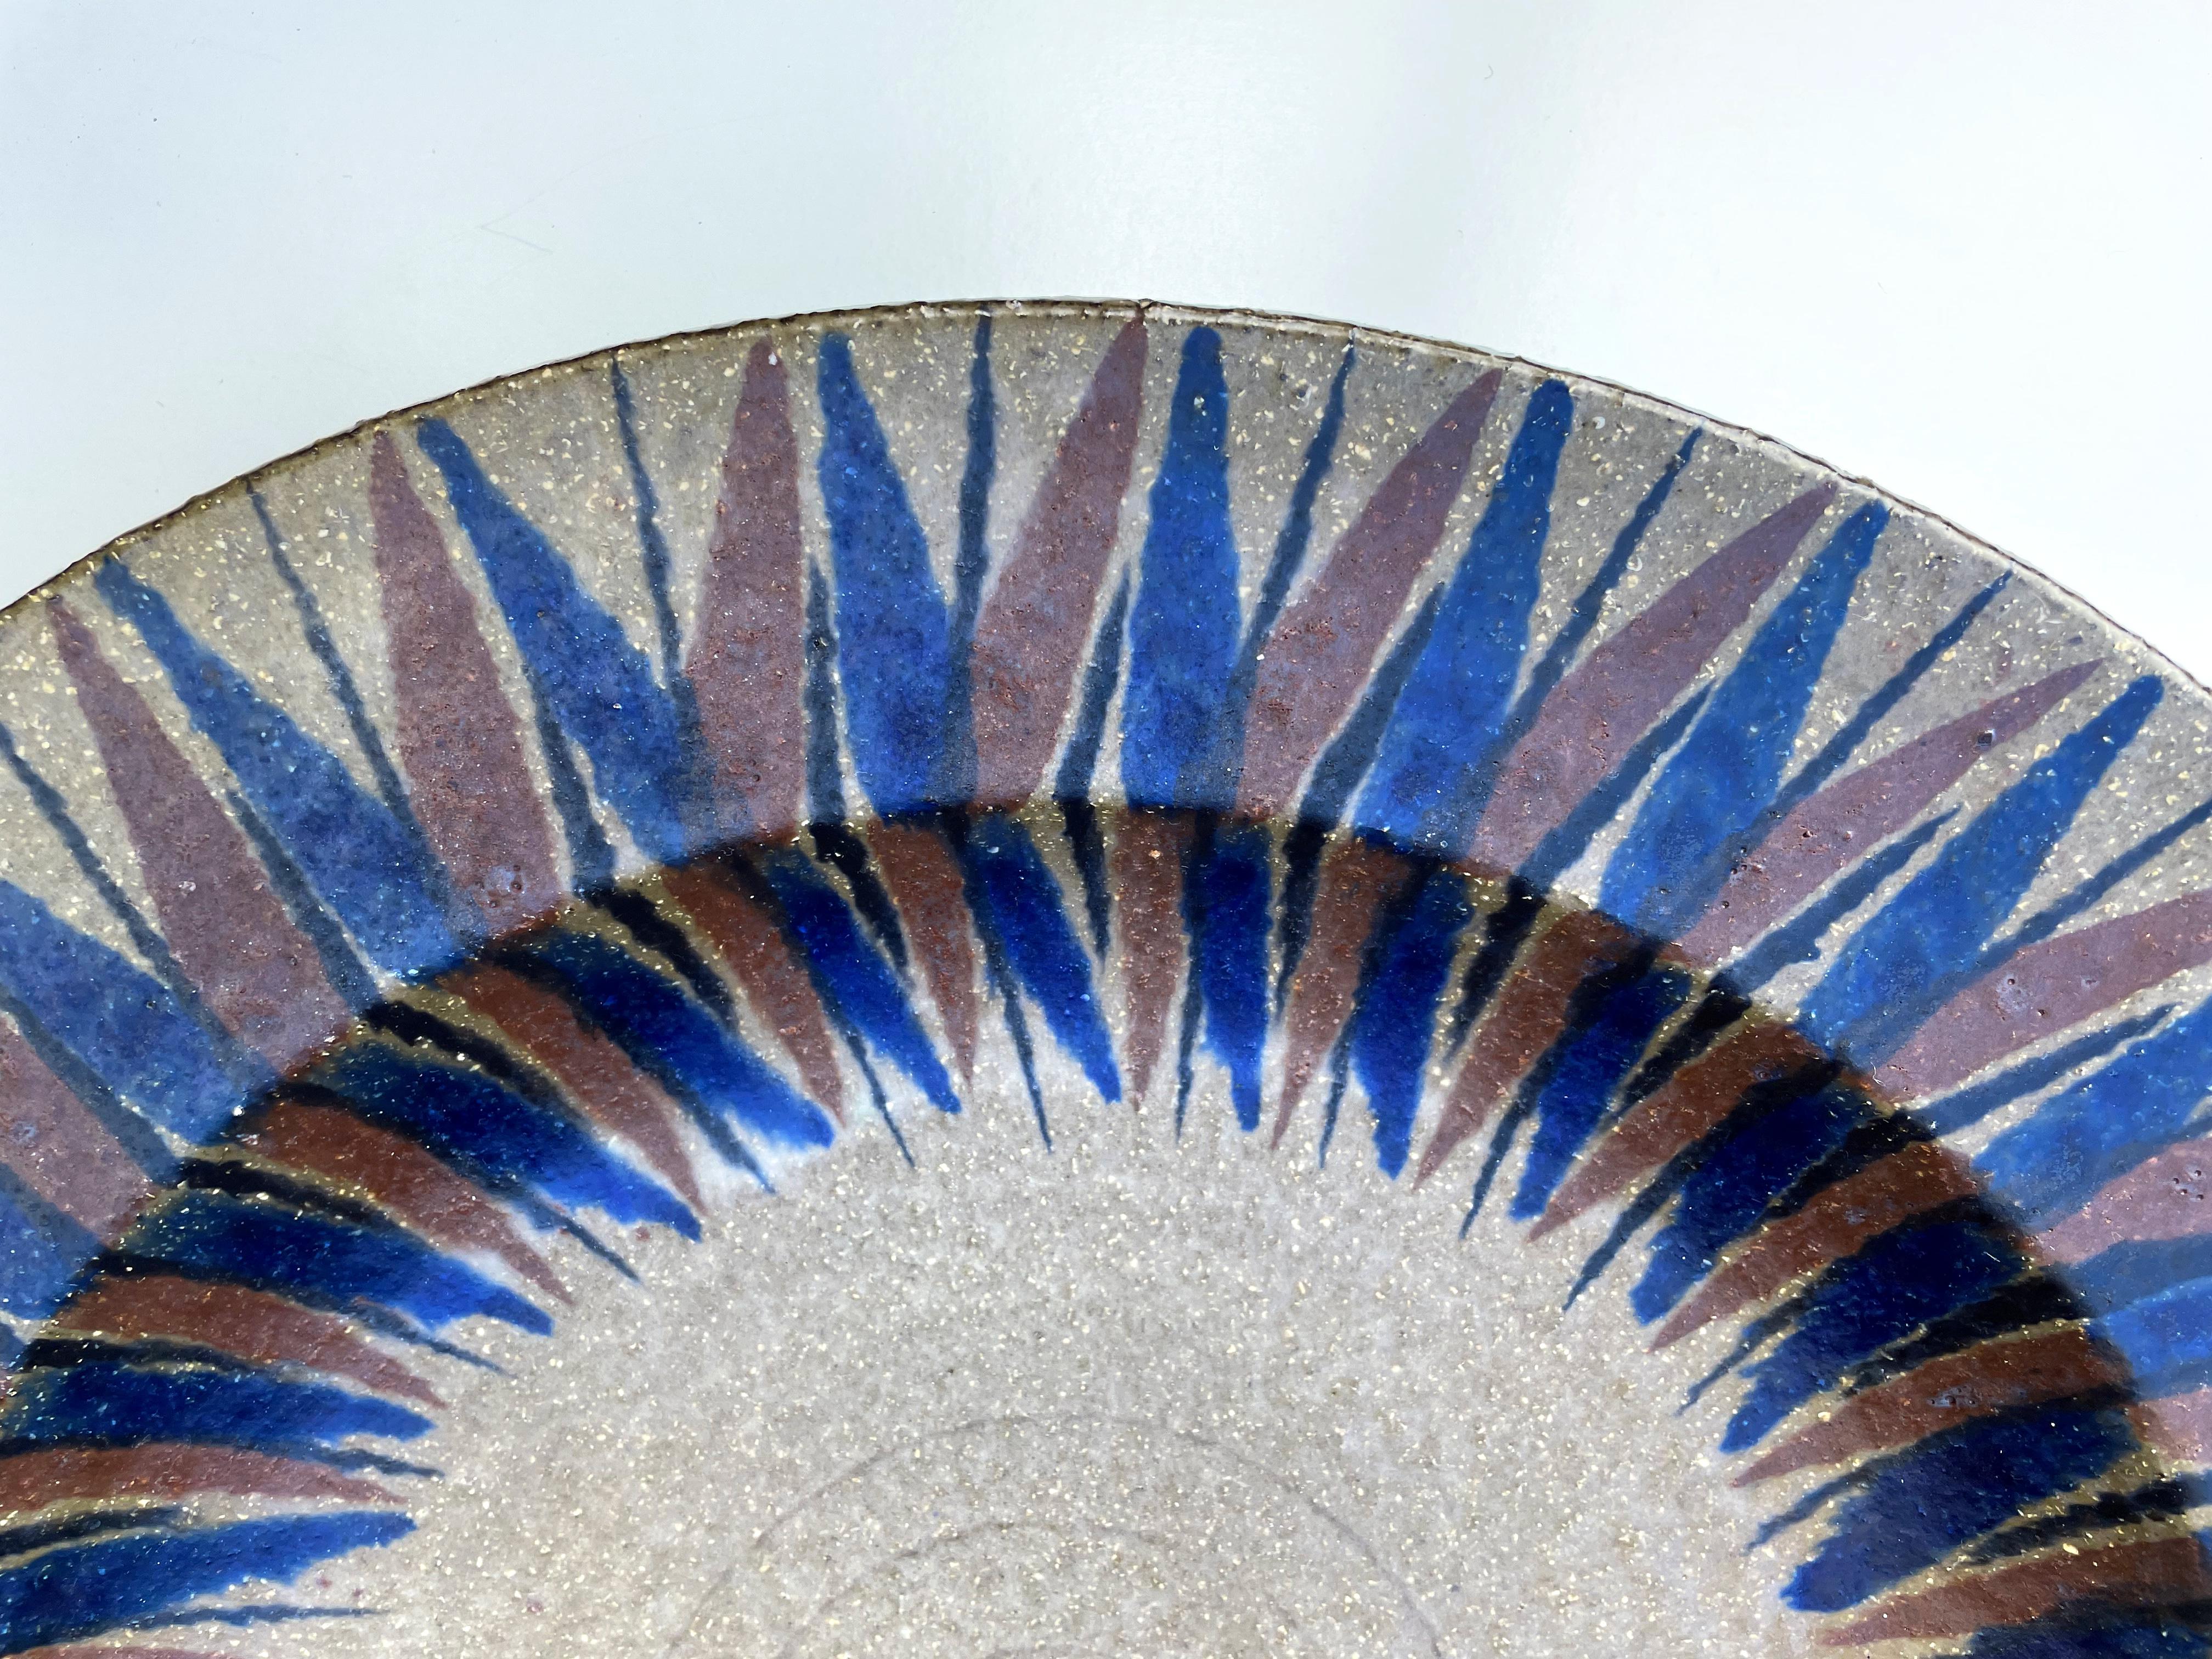 extra large decorative ceramic bowls